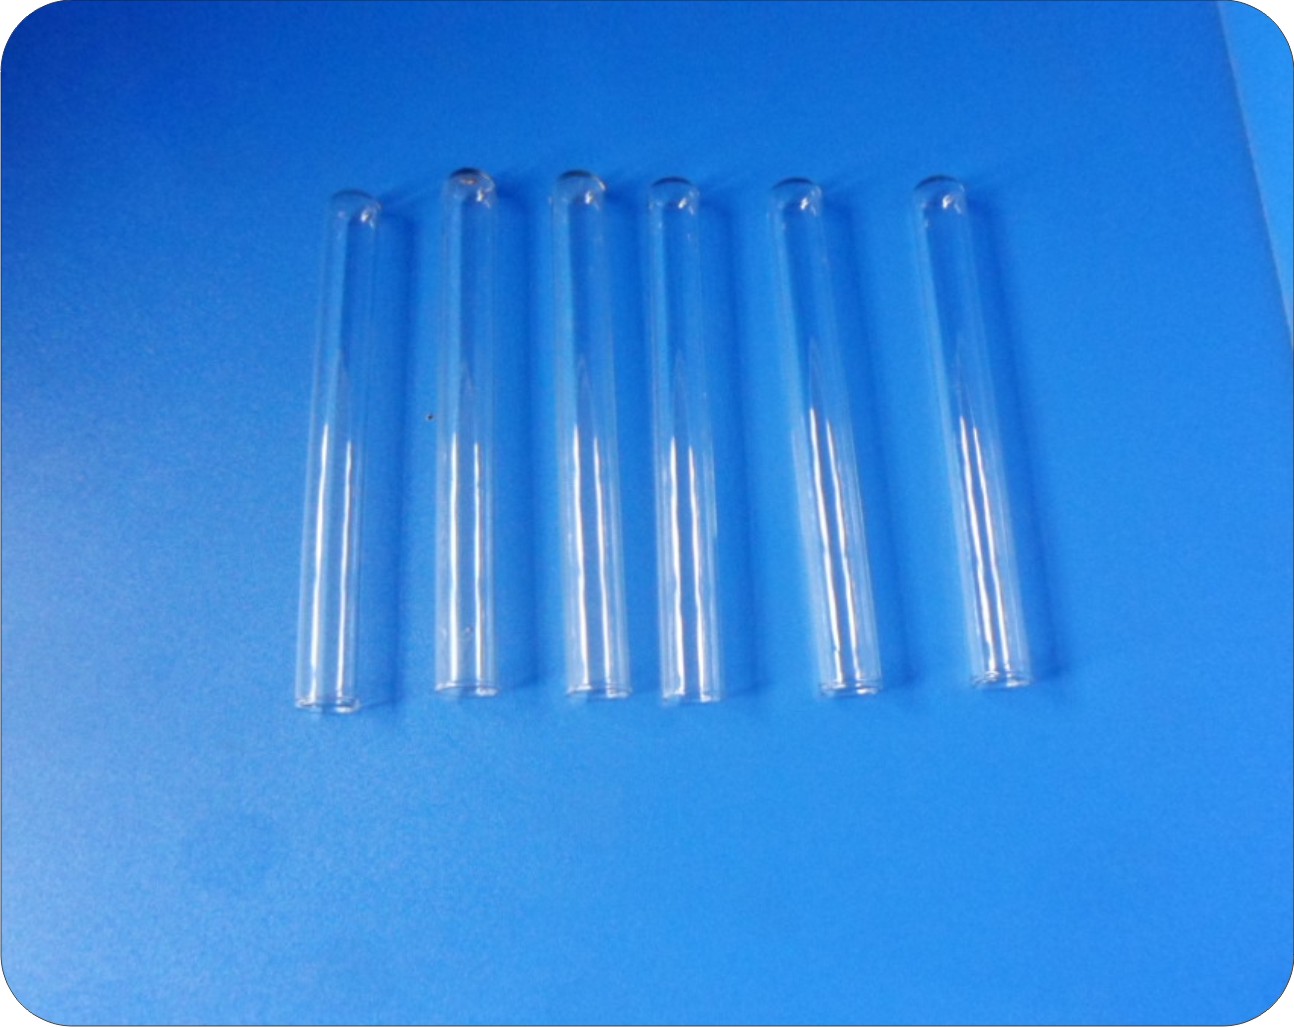 lass test tubes for scientific experiments